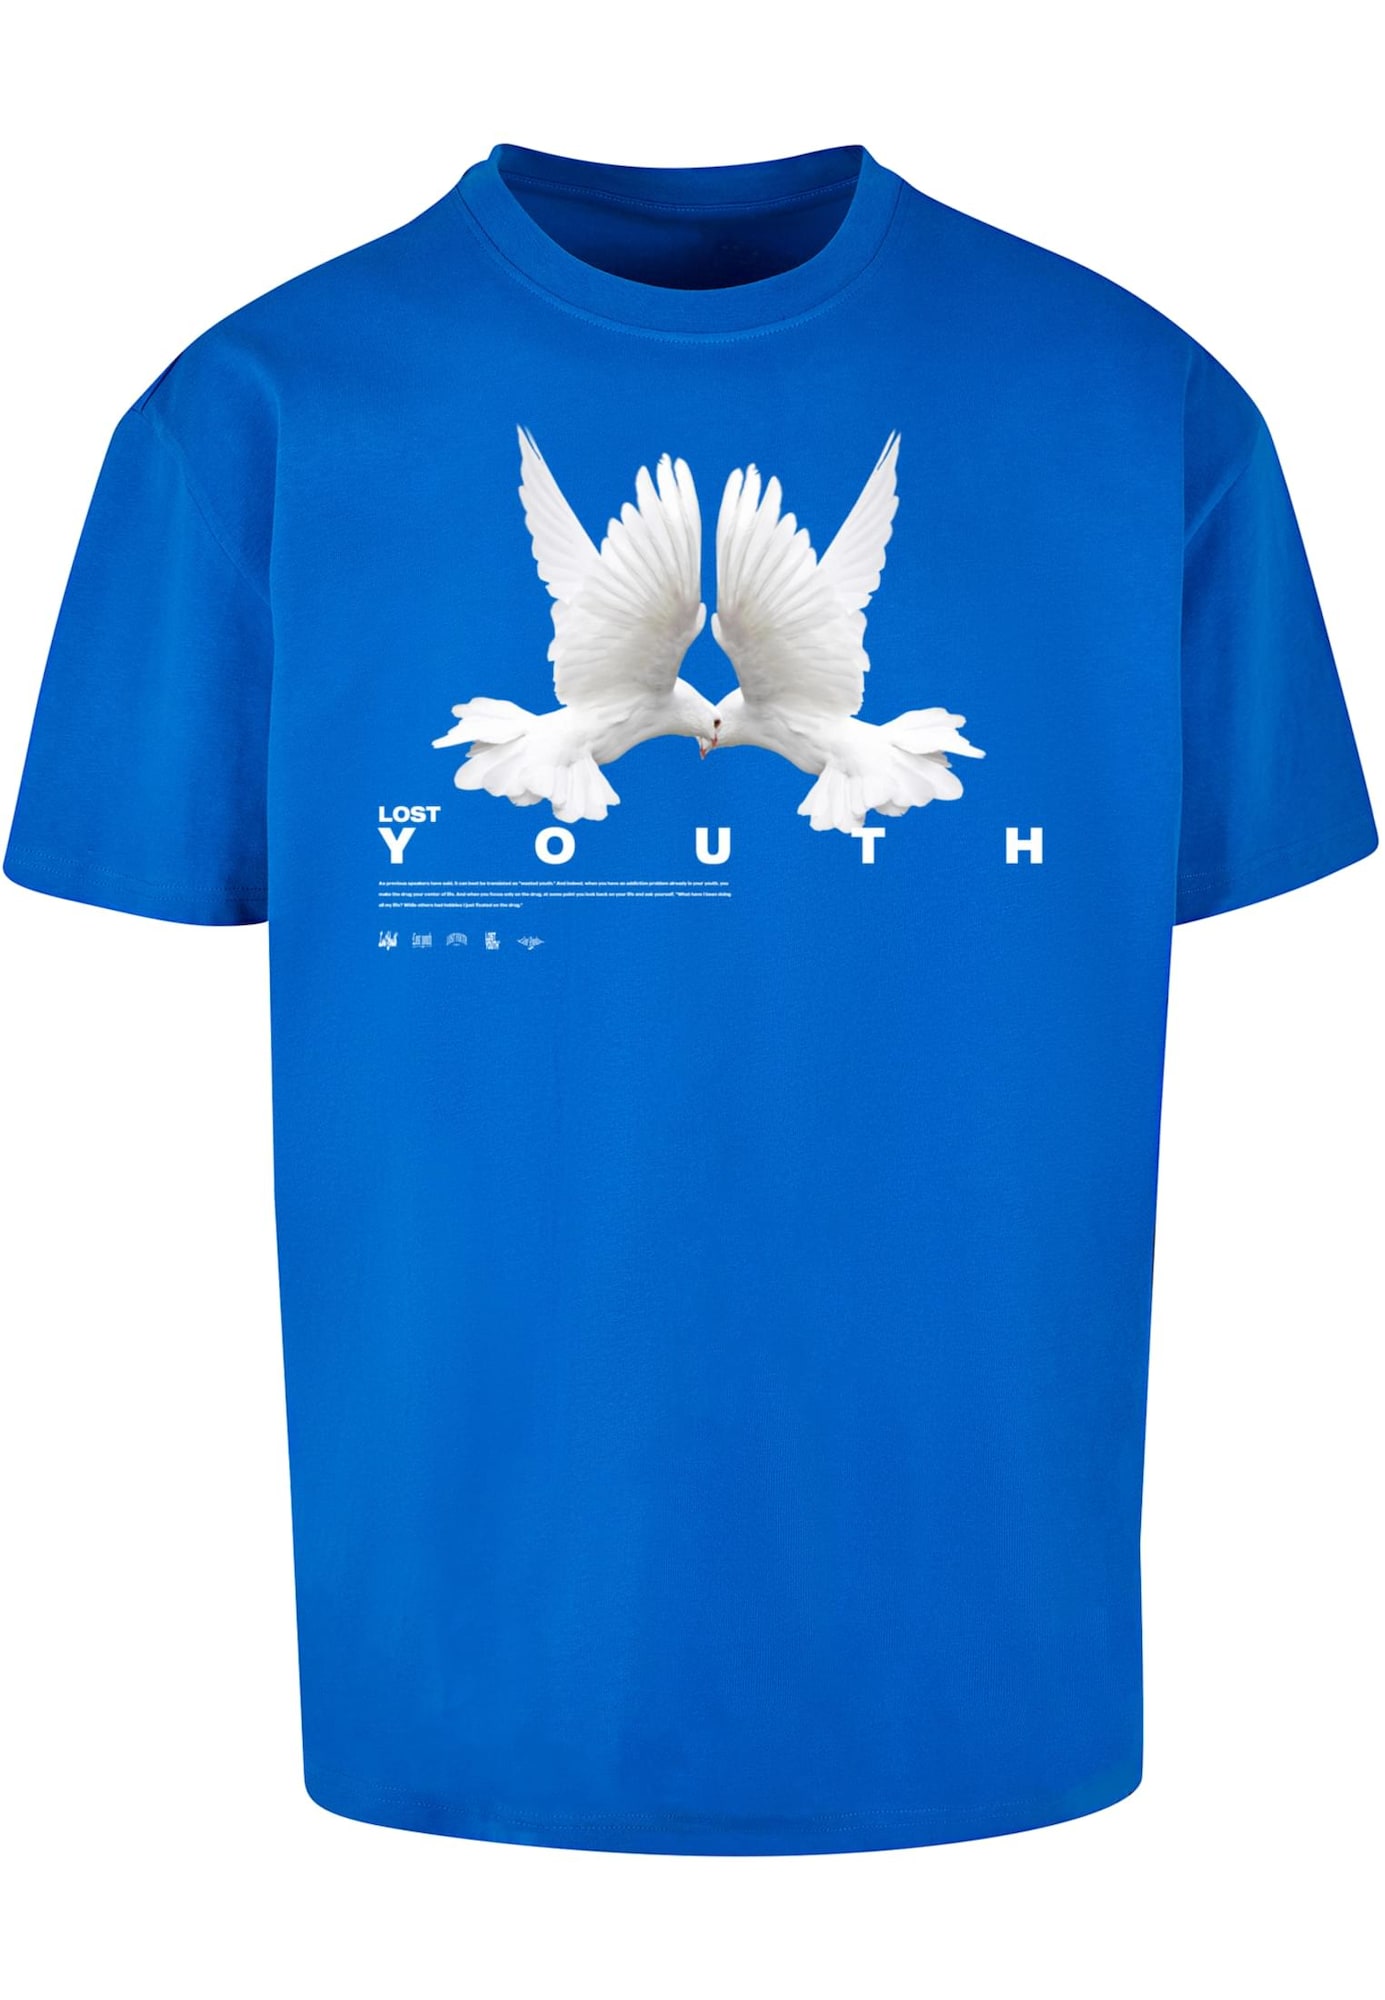 Lost Youth Marškinėliai 'Dove' sodri mėlyna („karališka“) / pilka / balta